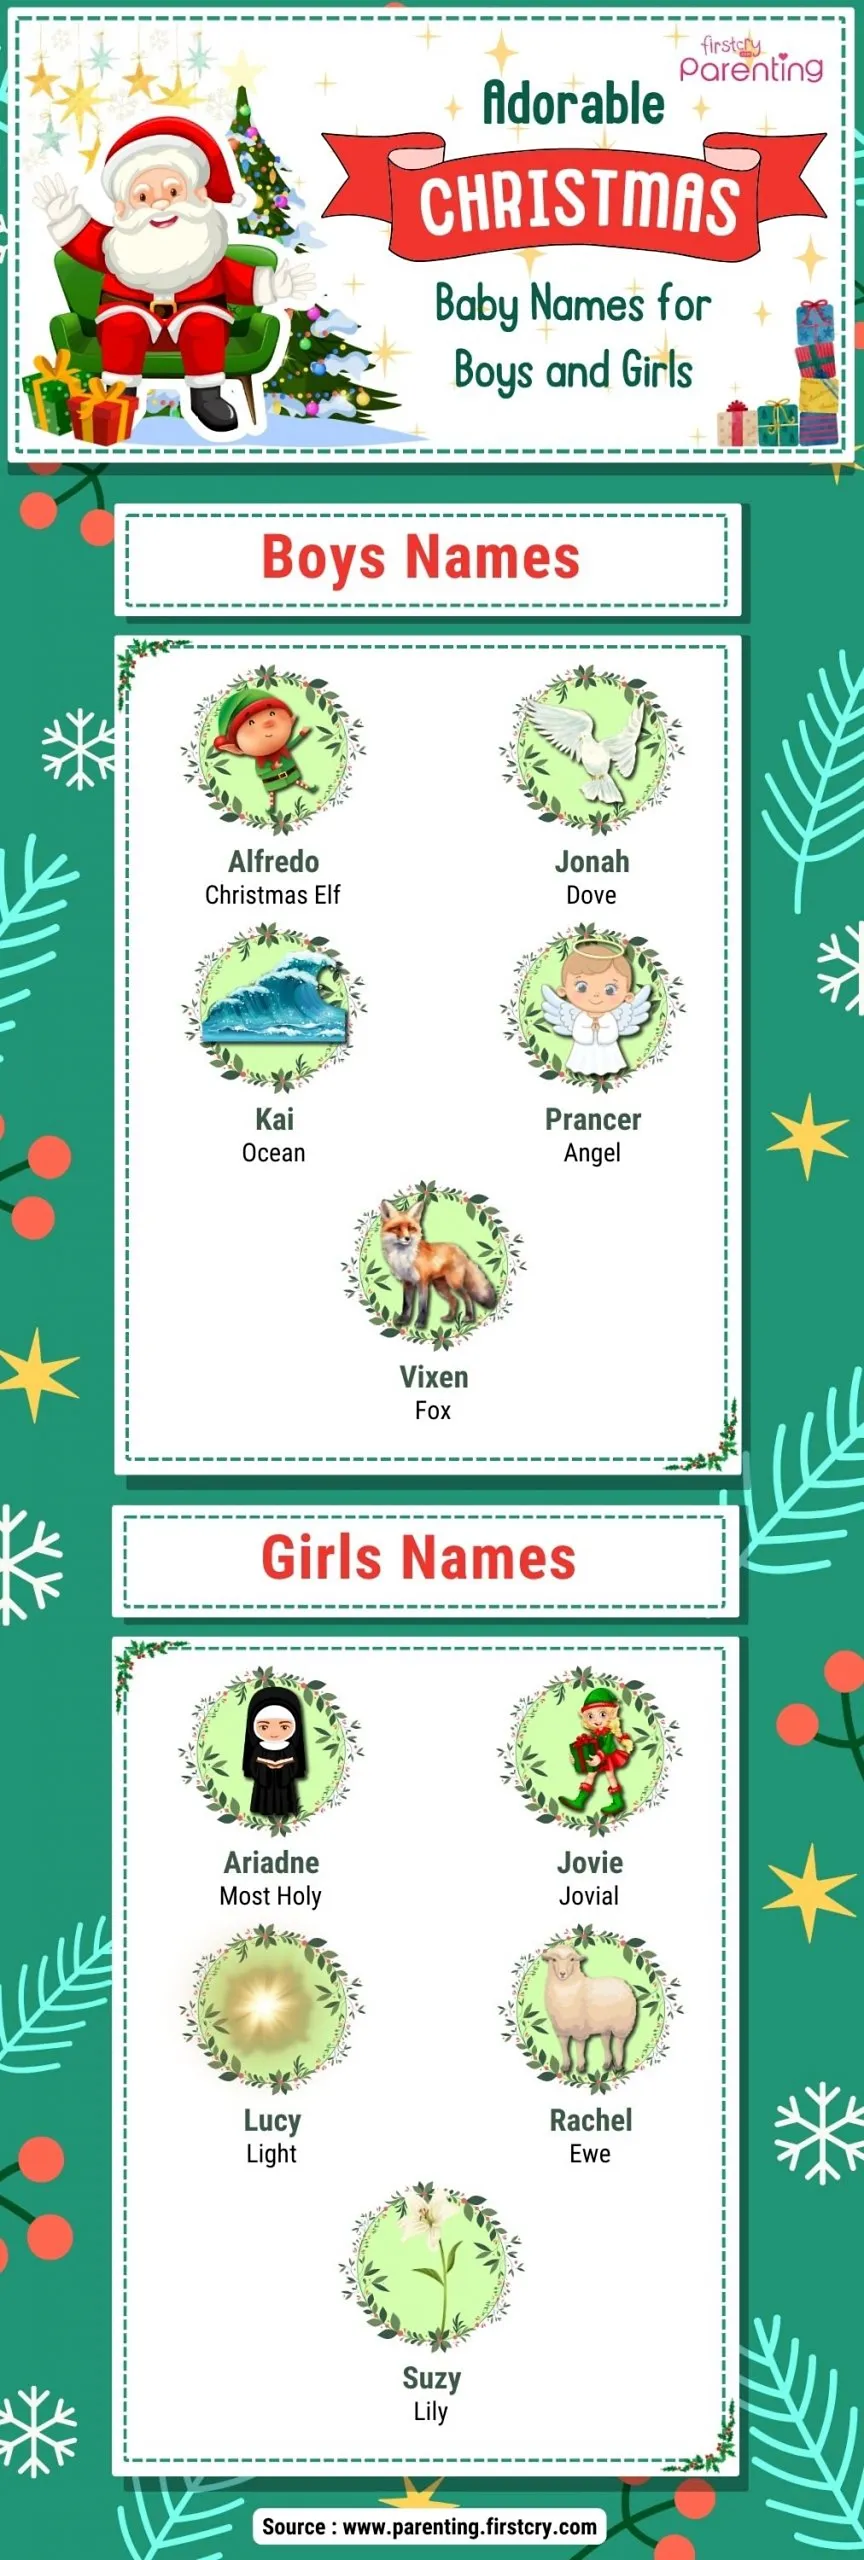 Adorable Christmas Baby Names for Boys and Girls - Infographic